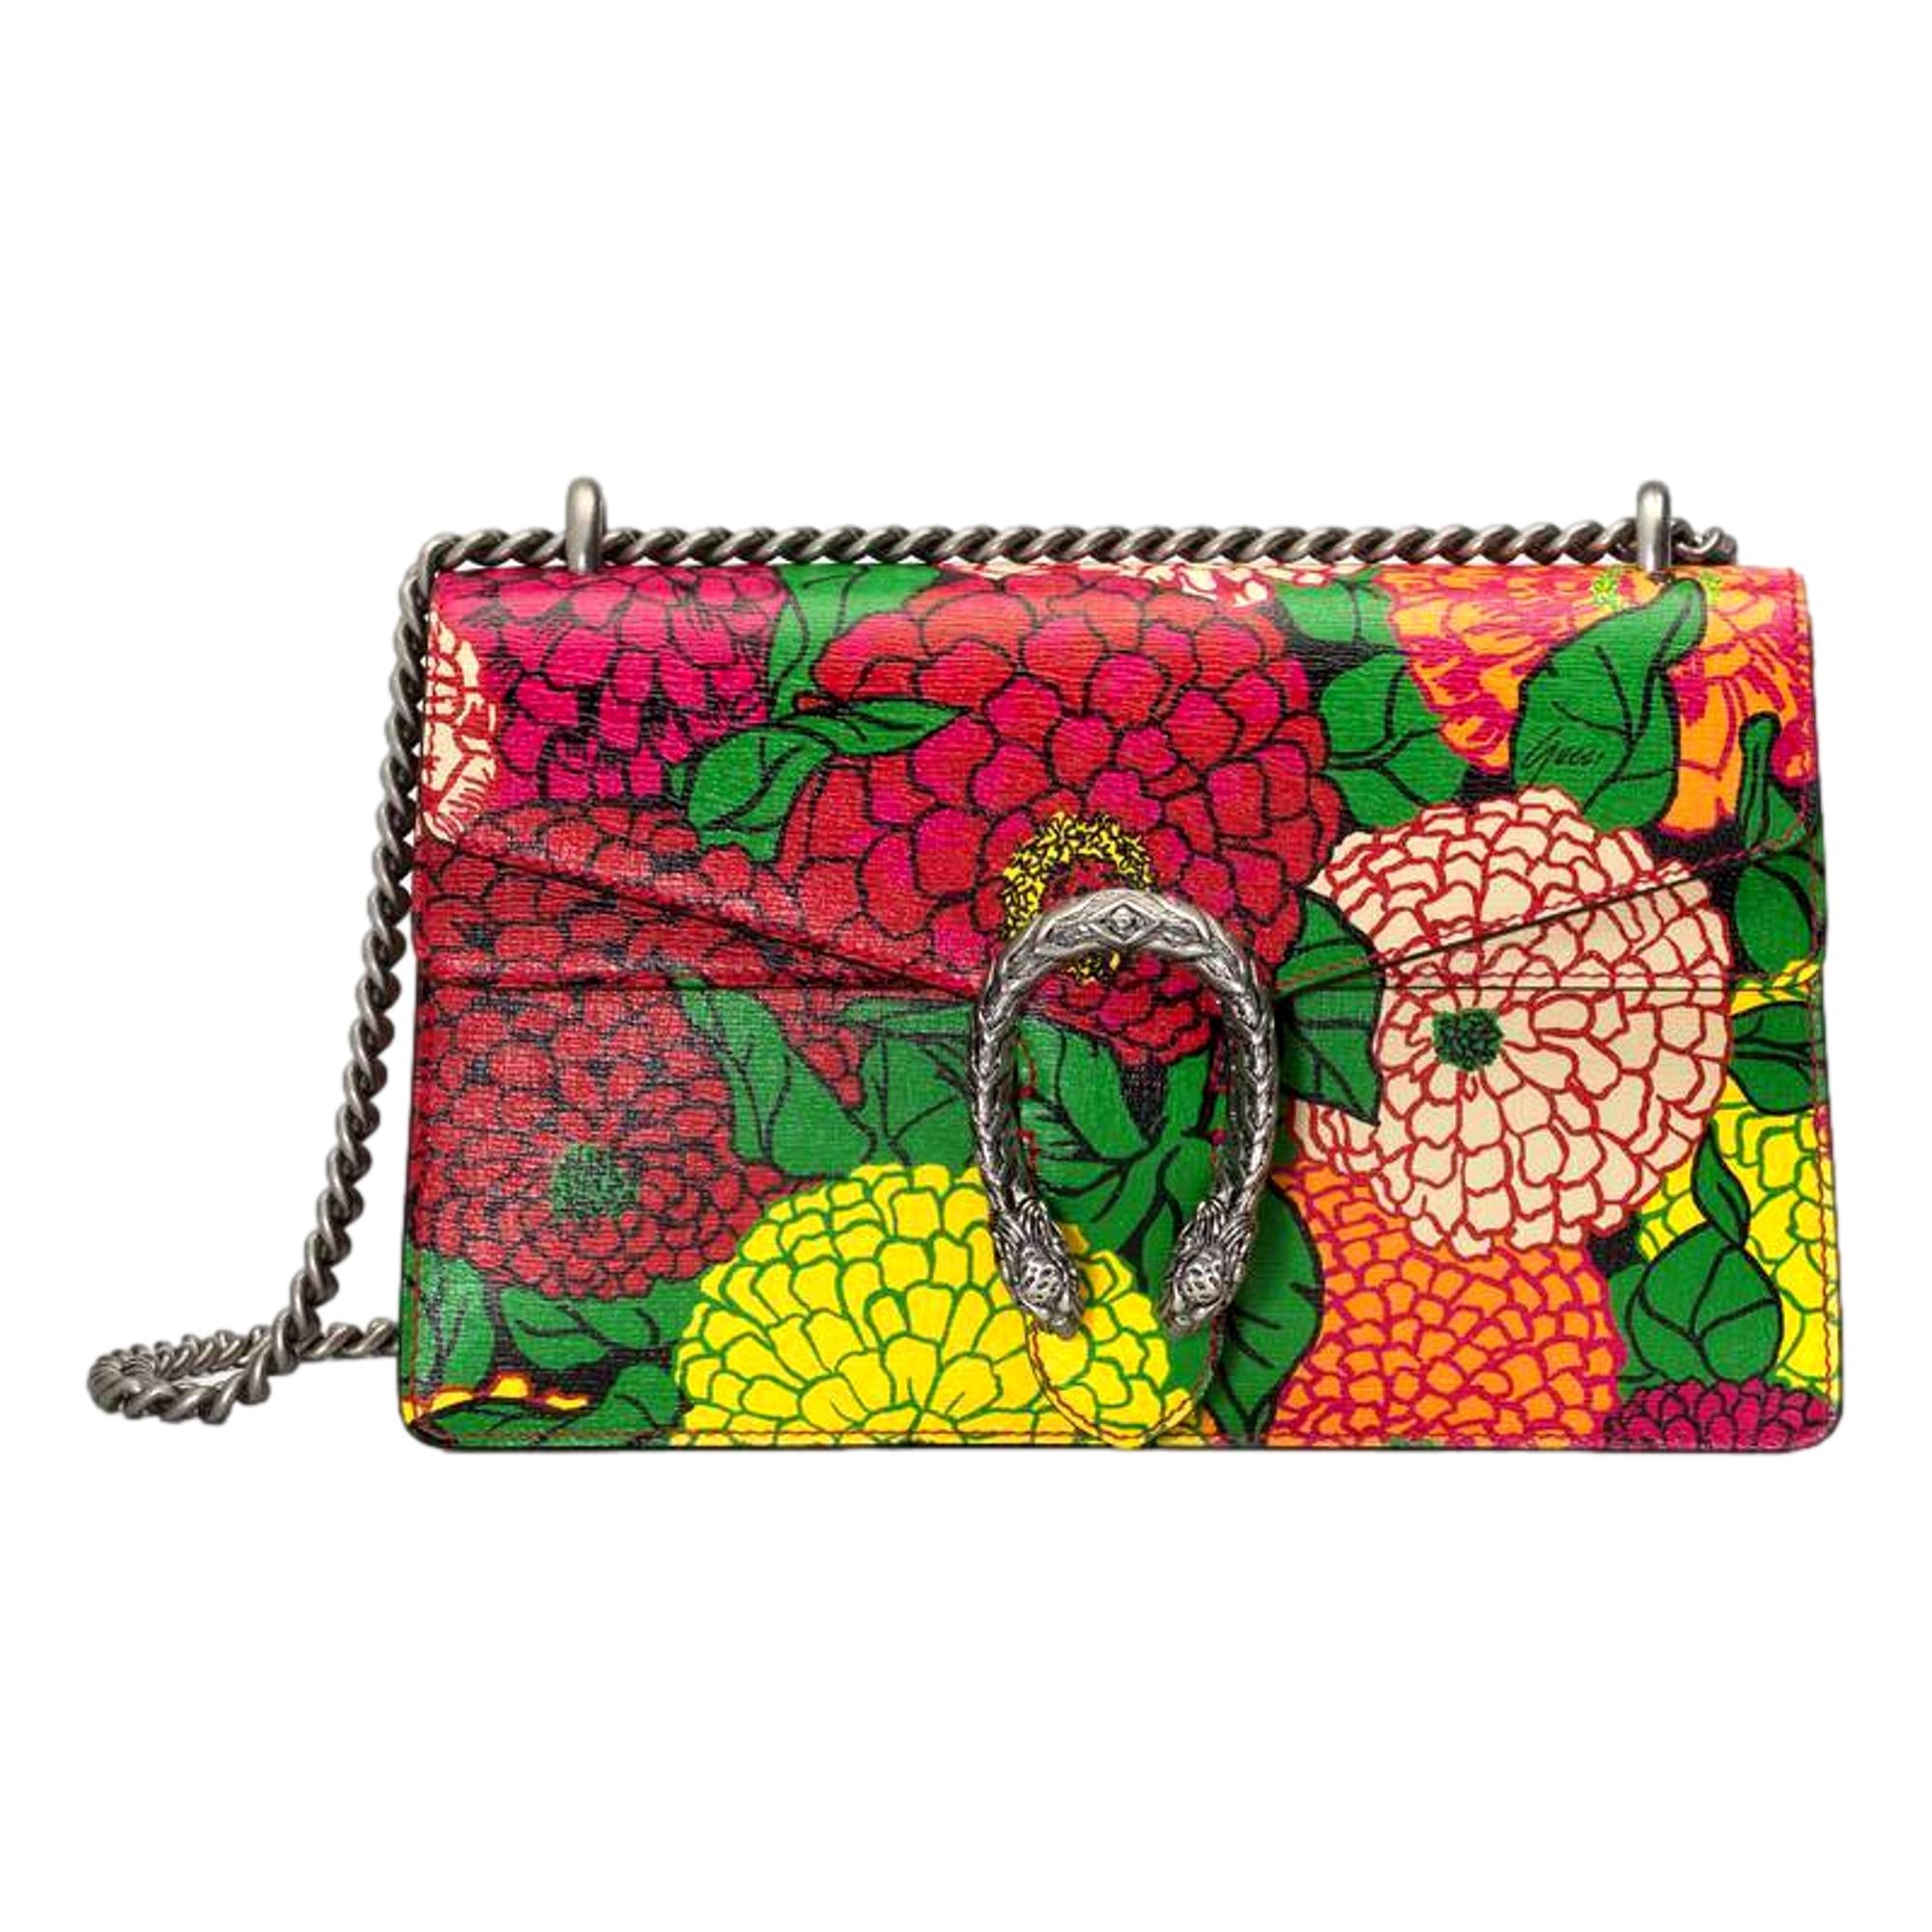 Gucci x Ken Scott Dionysus Floral Print Leather Shoulder Bag